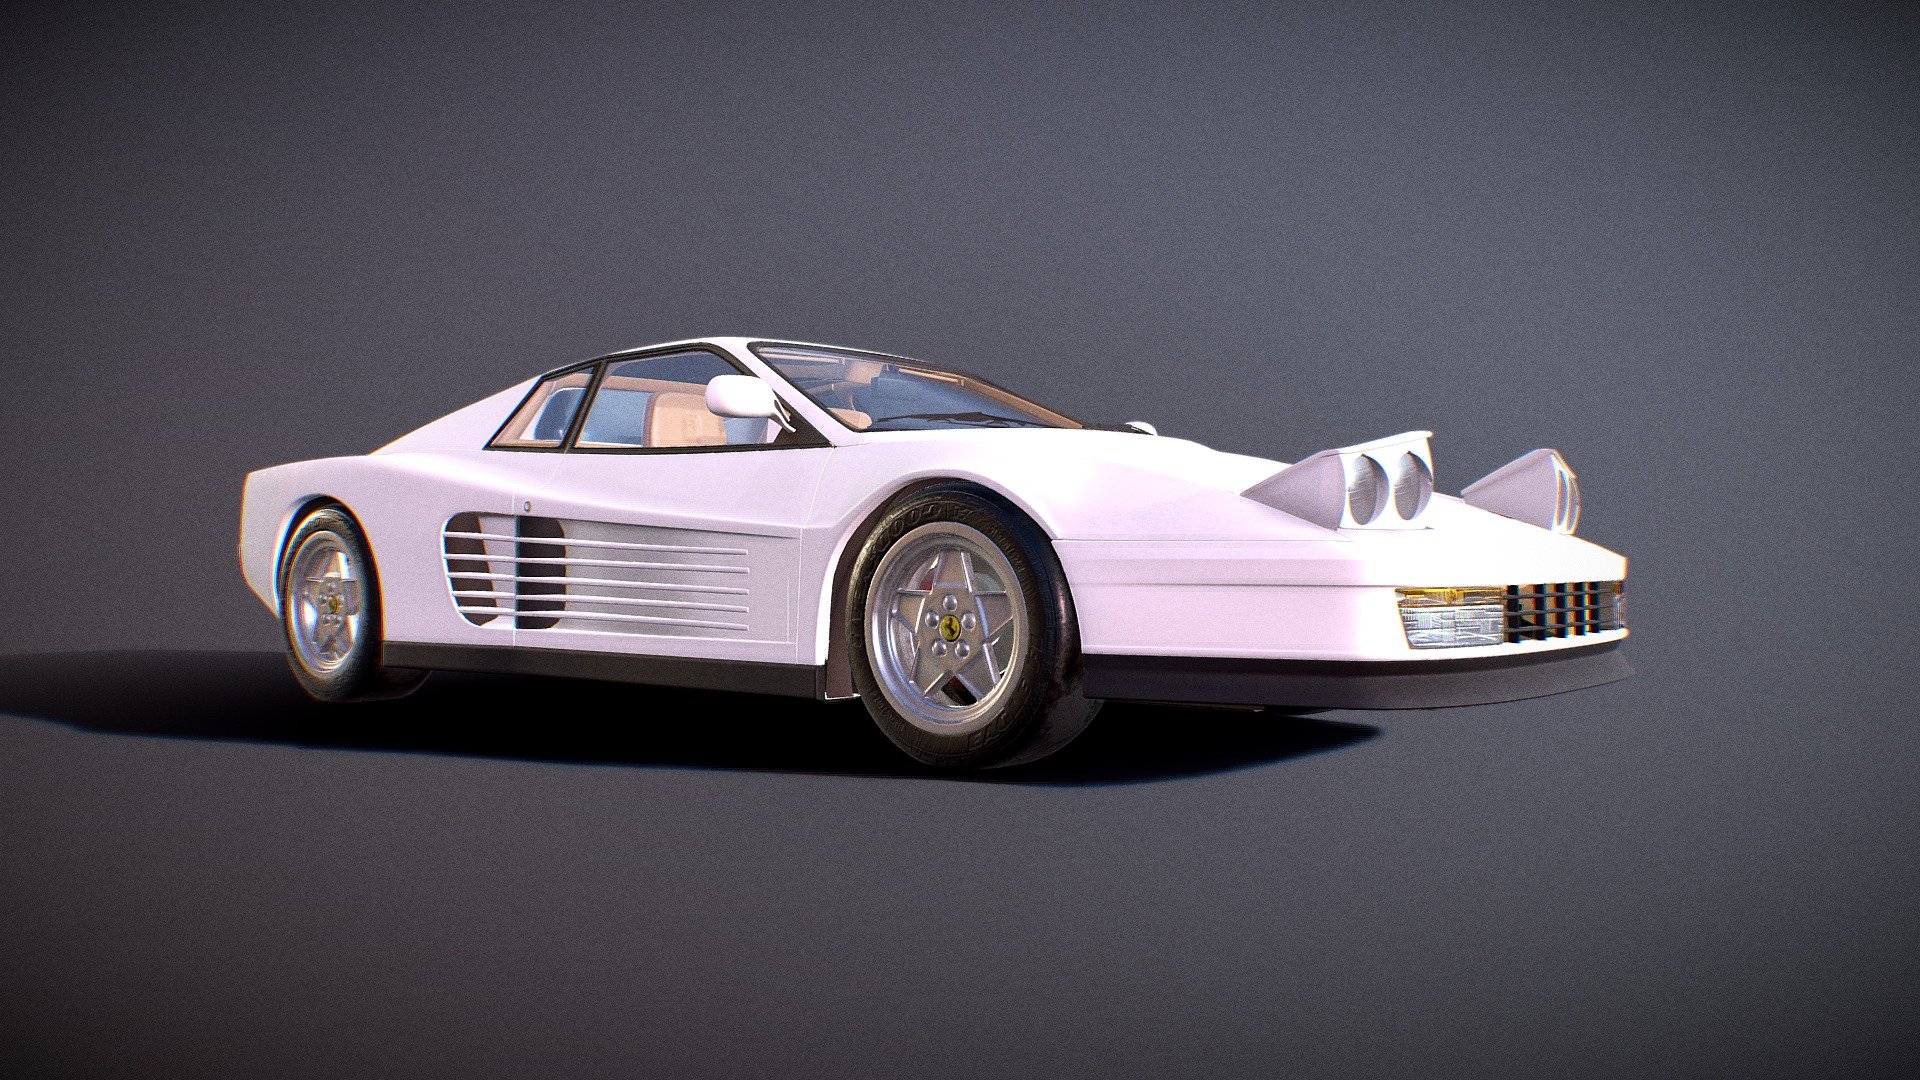 1987 Ferrari Testarossa. Inspired by the movie &ldquo;Miami Vice